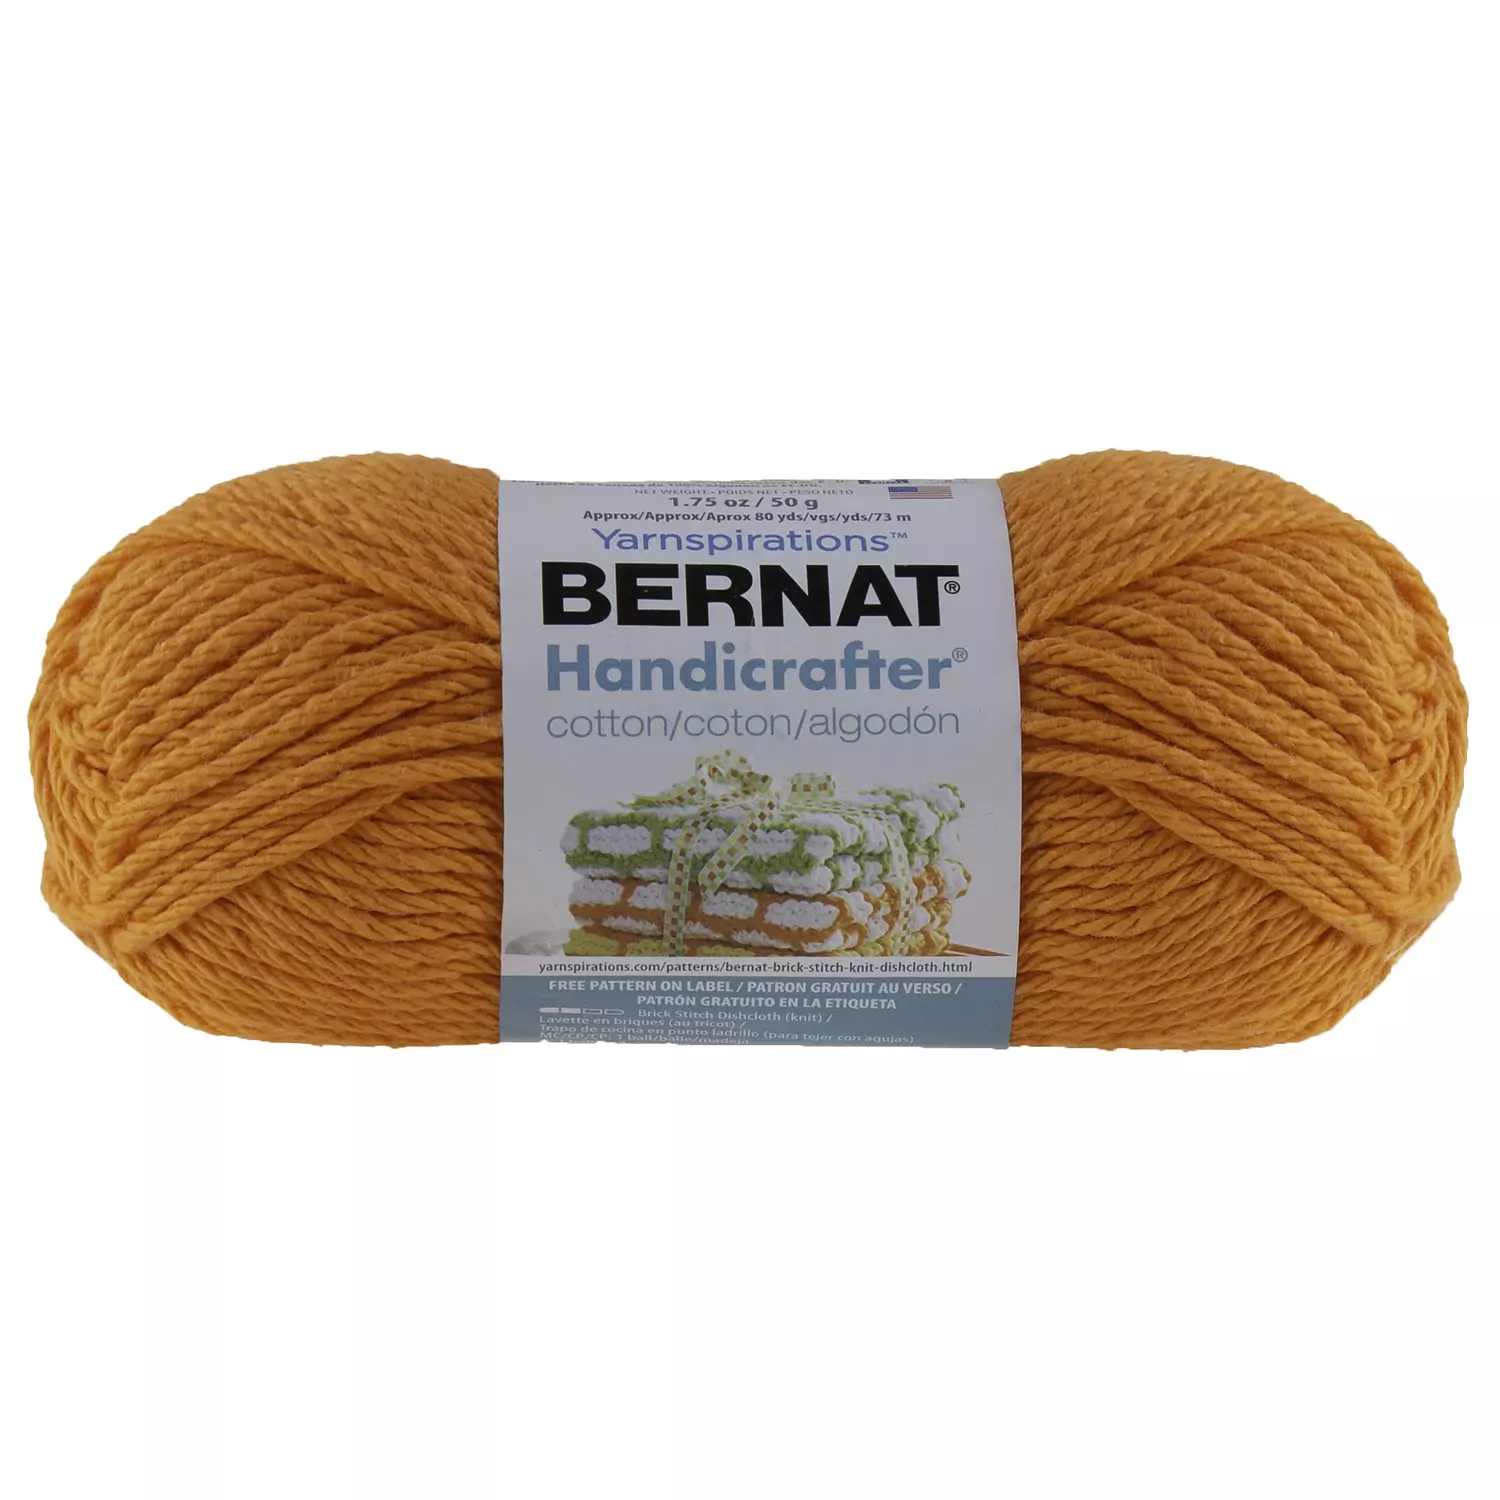 Bernat Handicrafter - Cotton yarn, hot orange